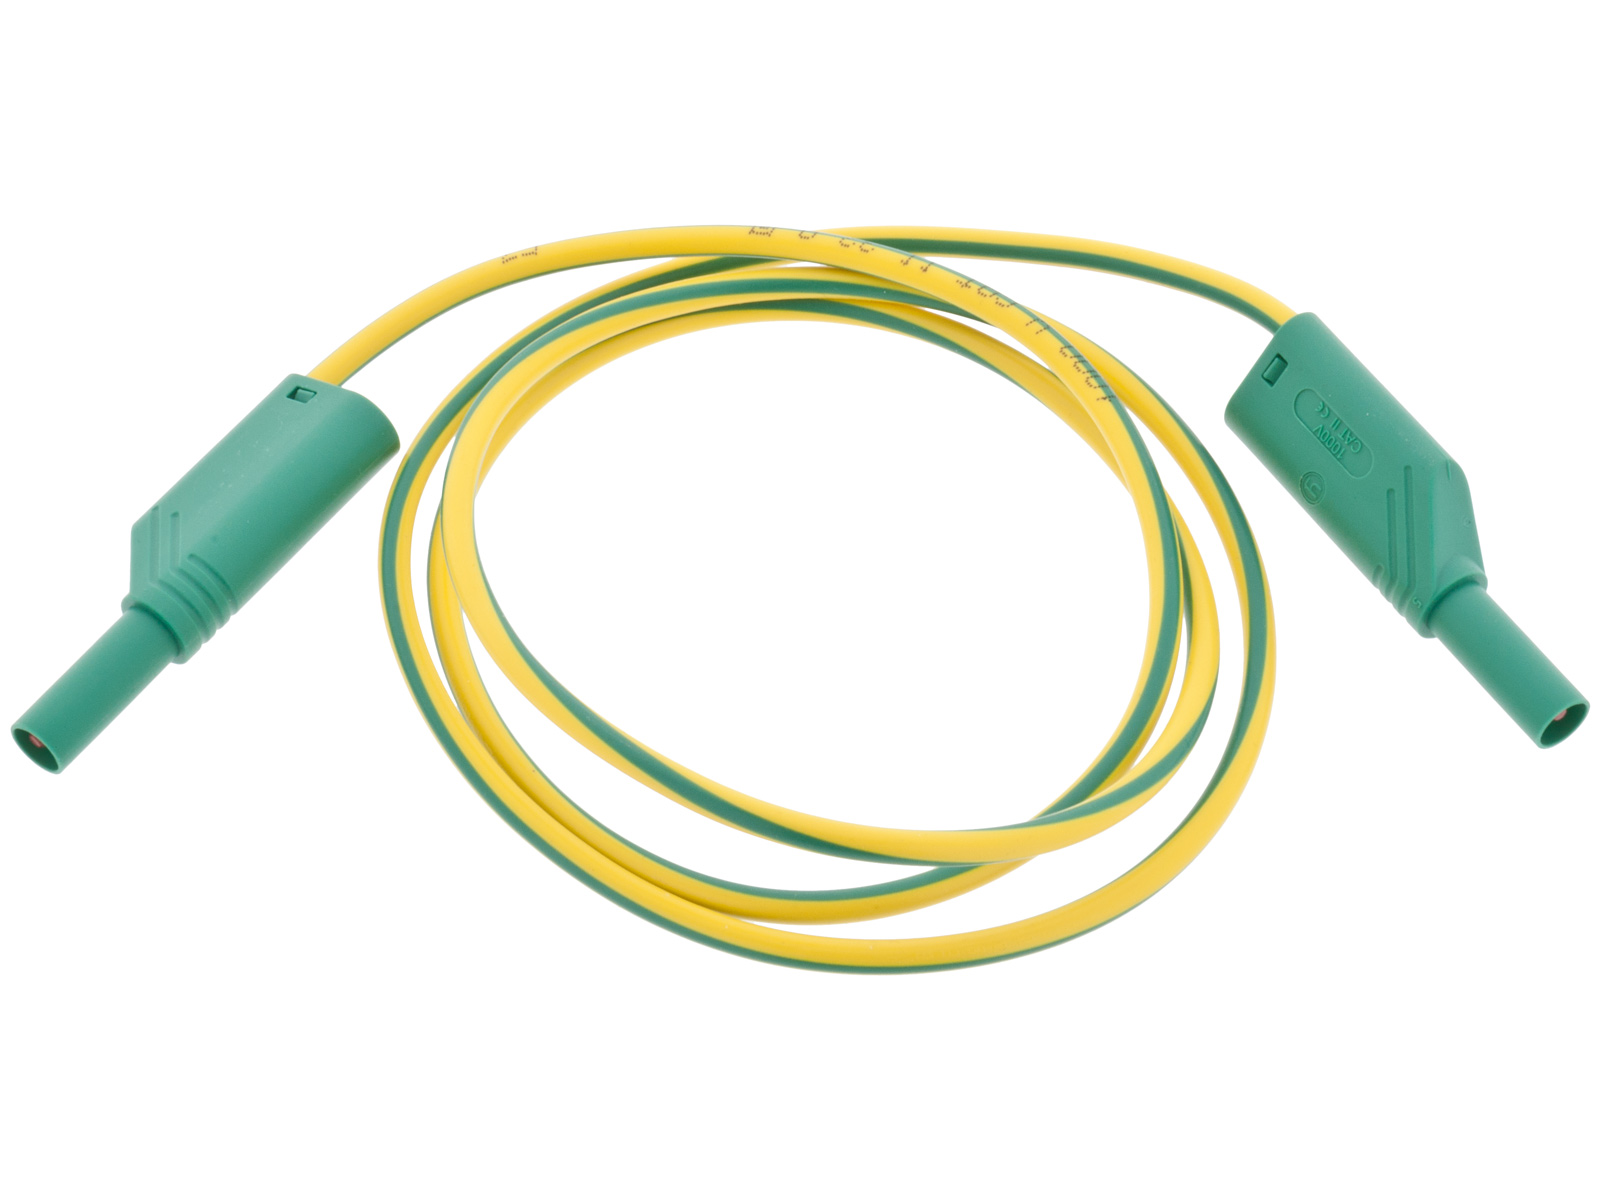 Säkerhetslaboratoriekabel ø4mm 2.5mm2 stackbar 1m gul/grön @ electrokit